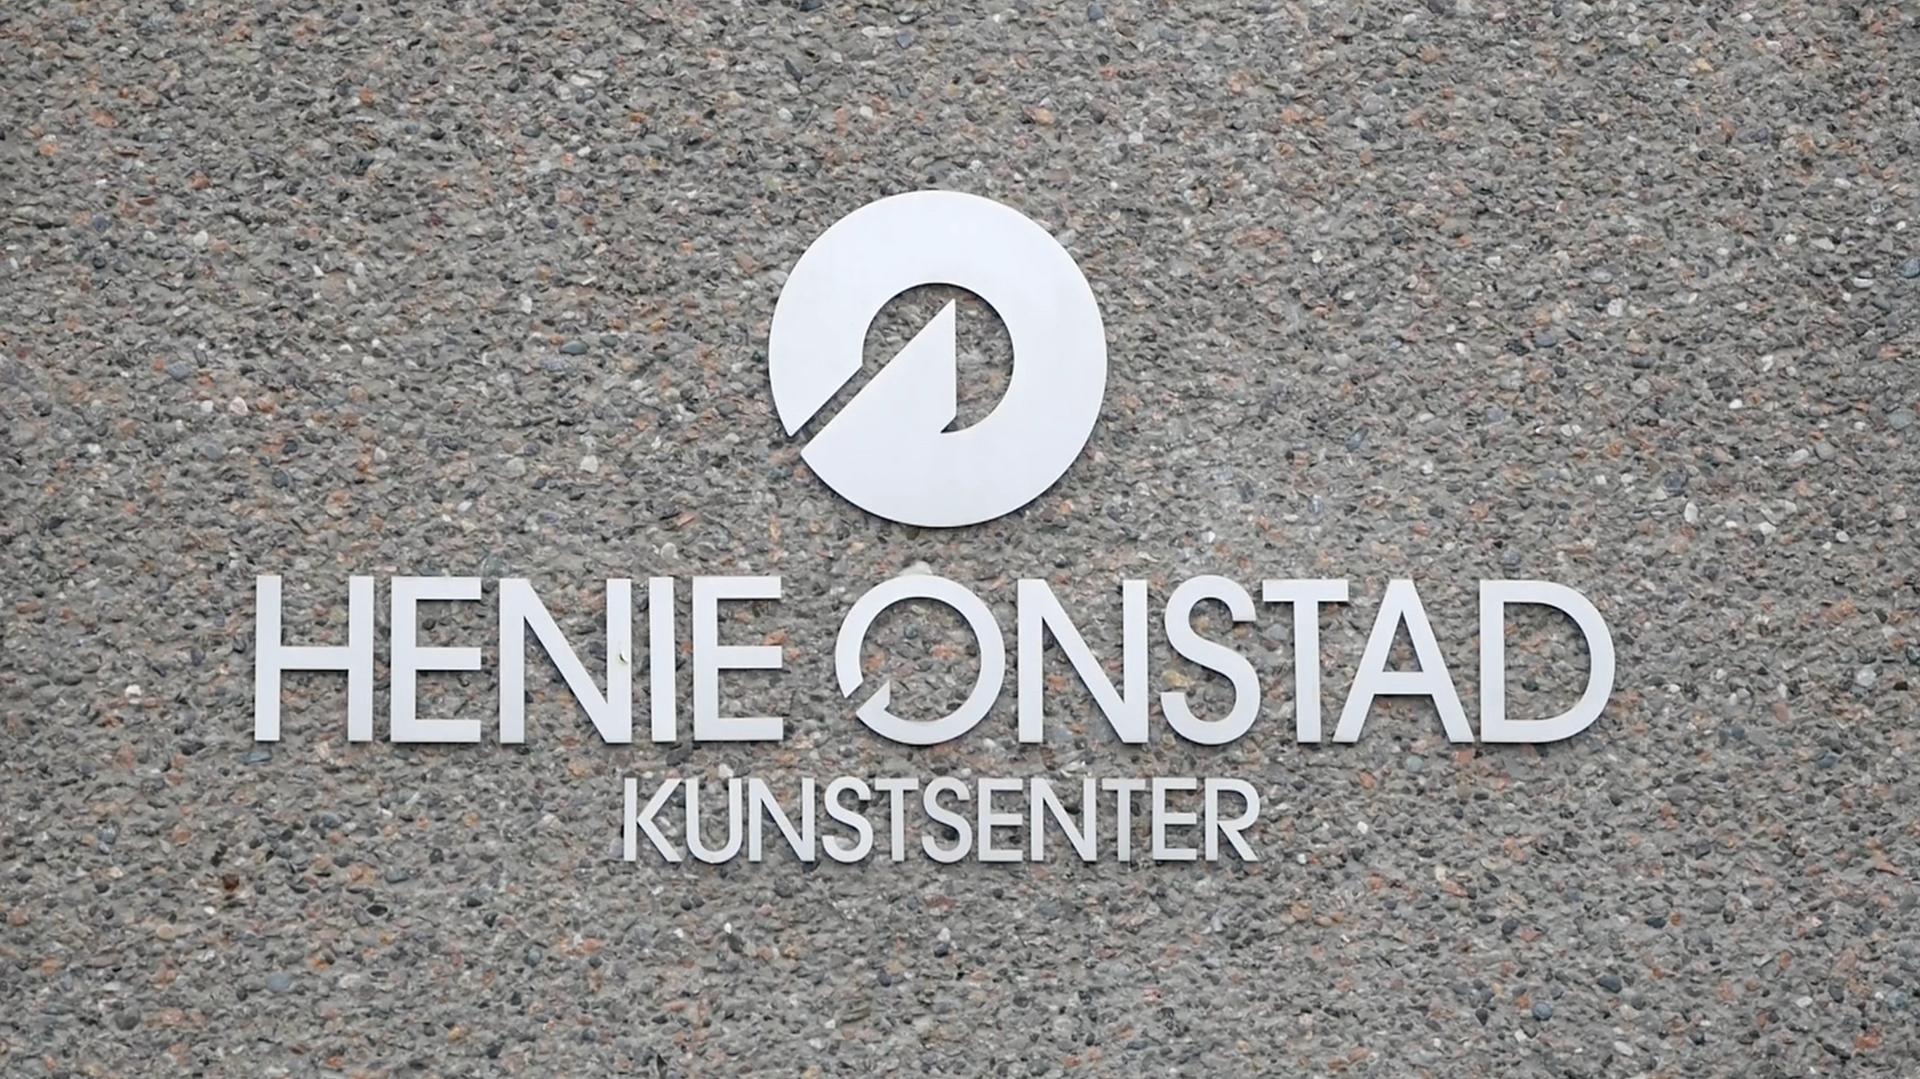 Henie Onstad Kunstsenter